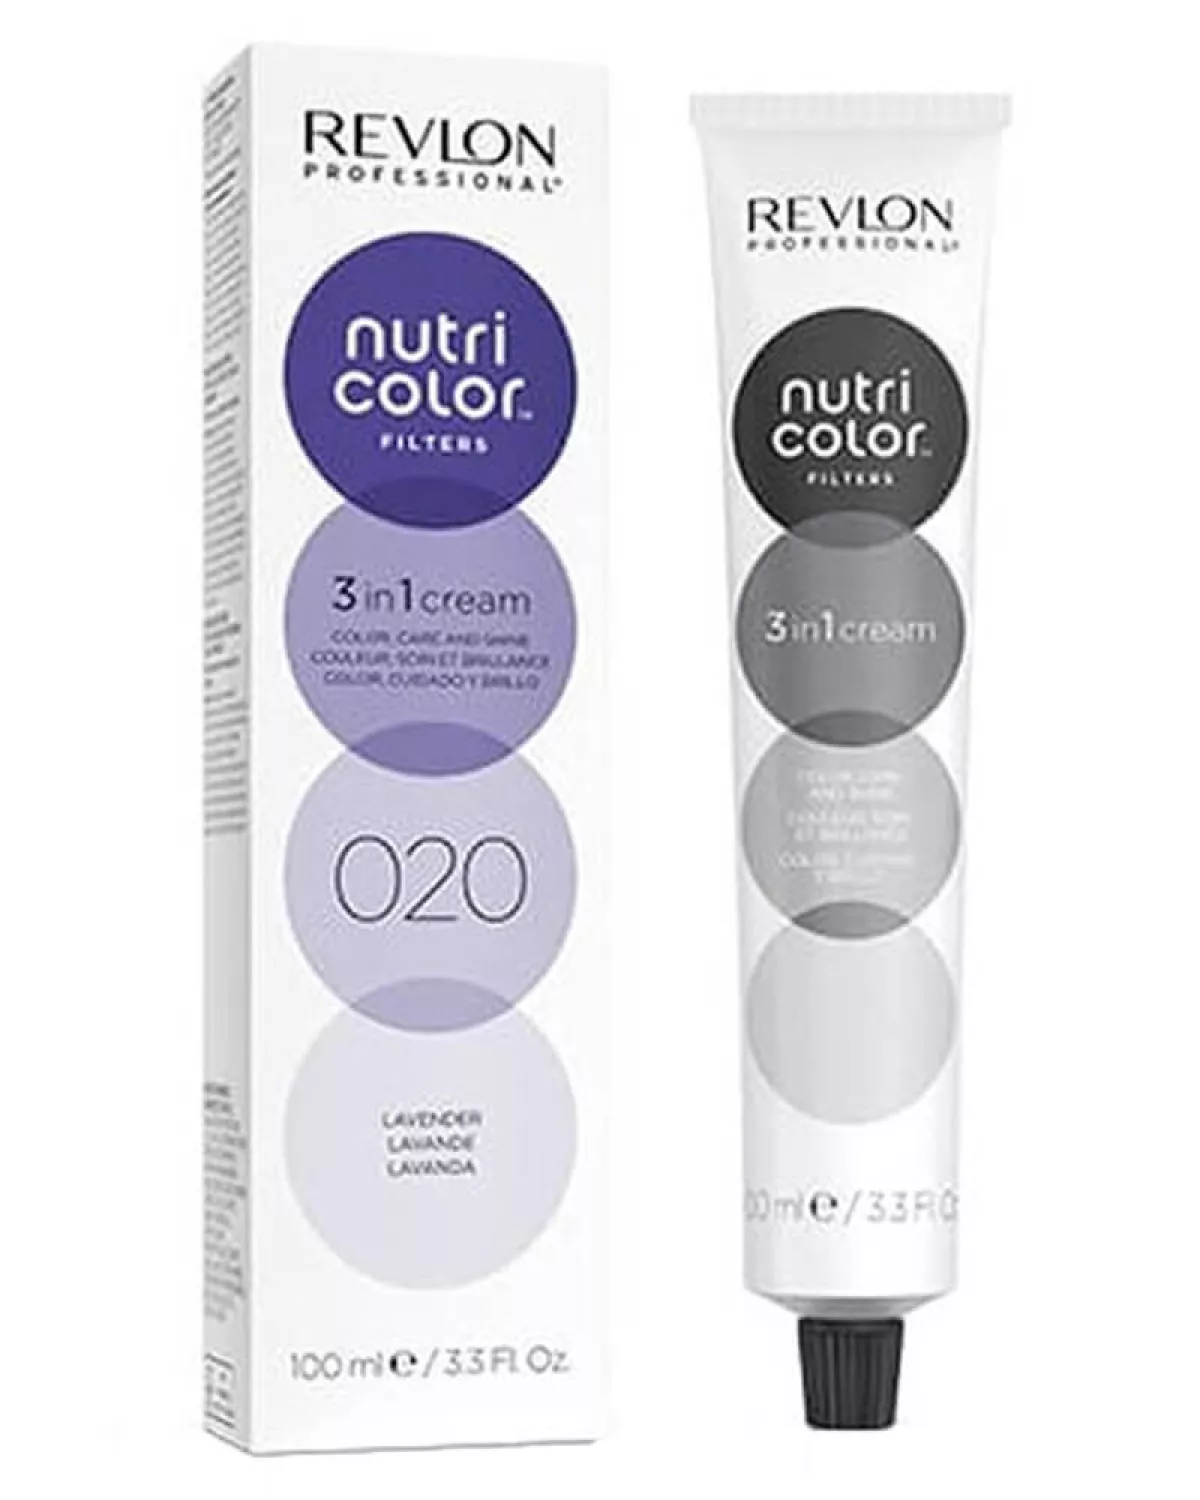 #1 - Revlon Nutri Color Creme 020 100 ml